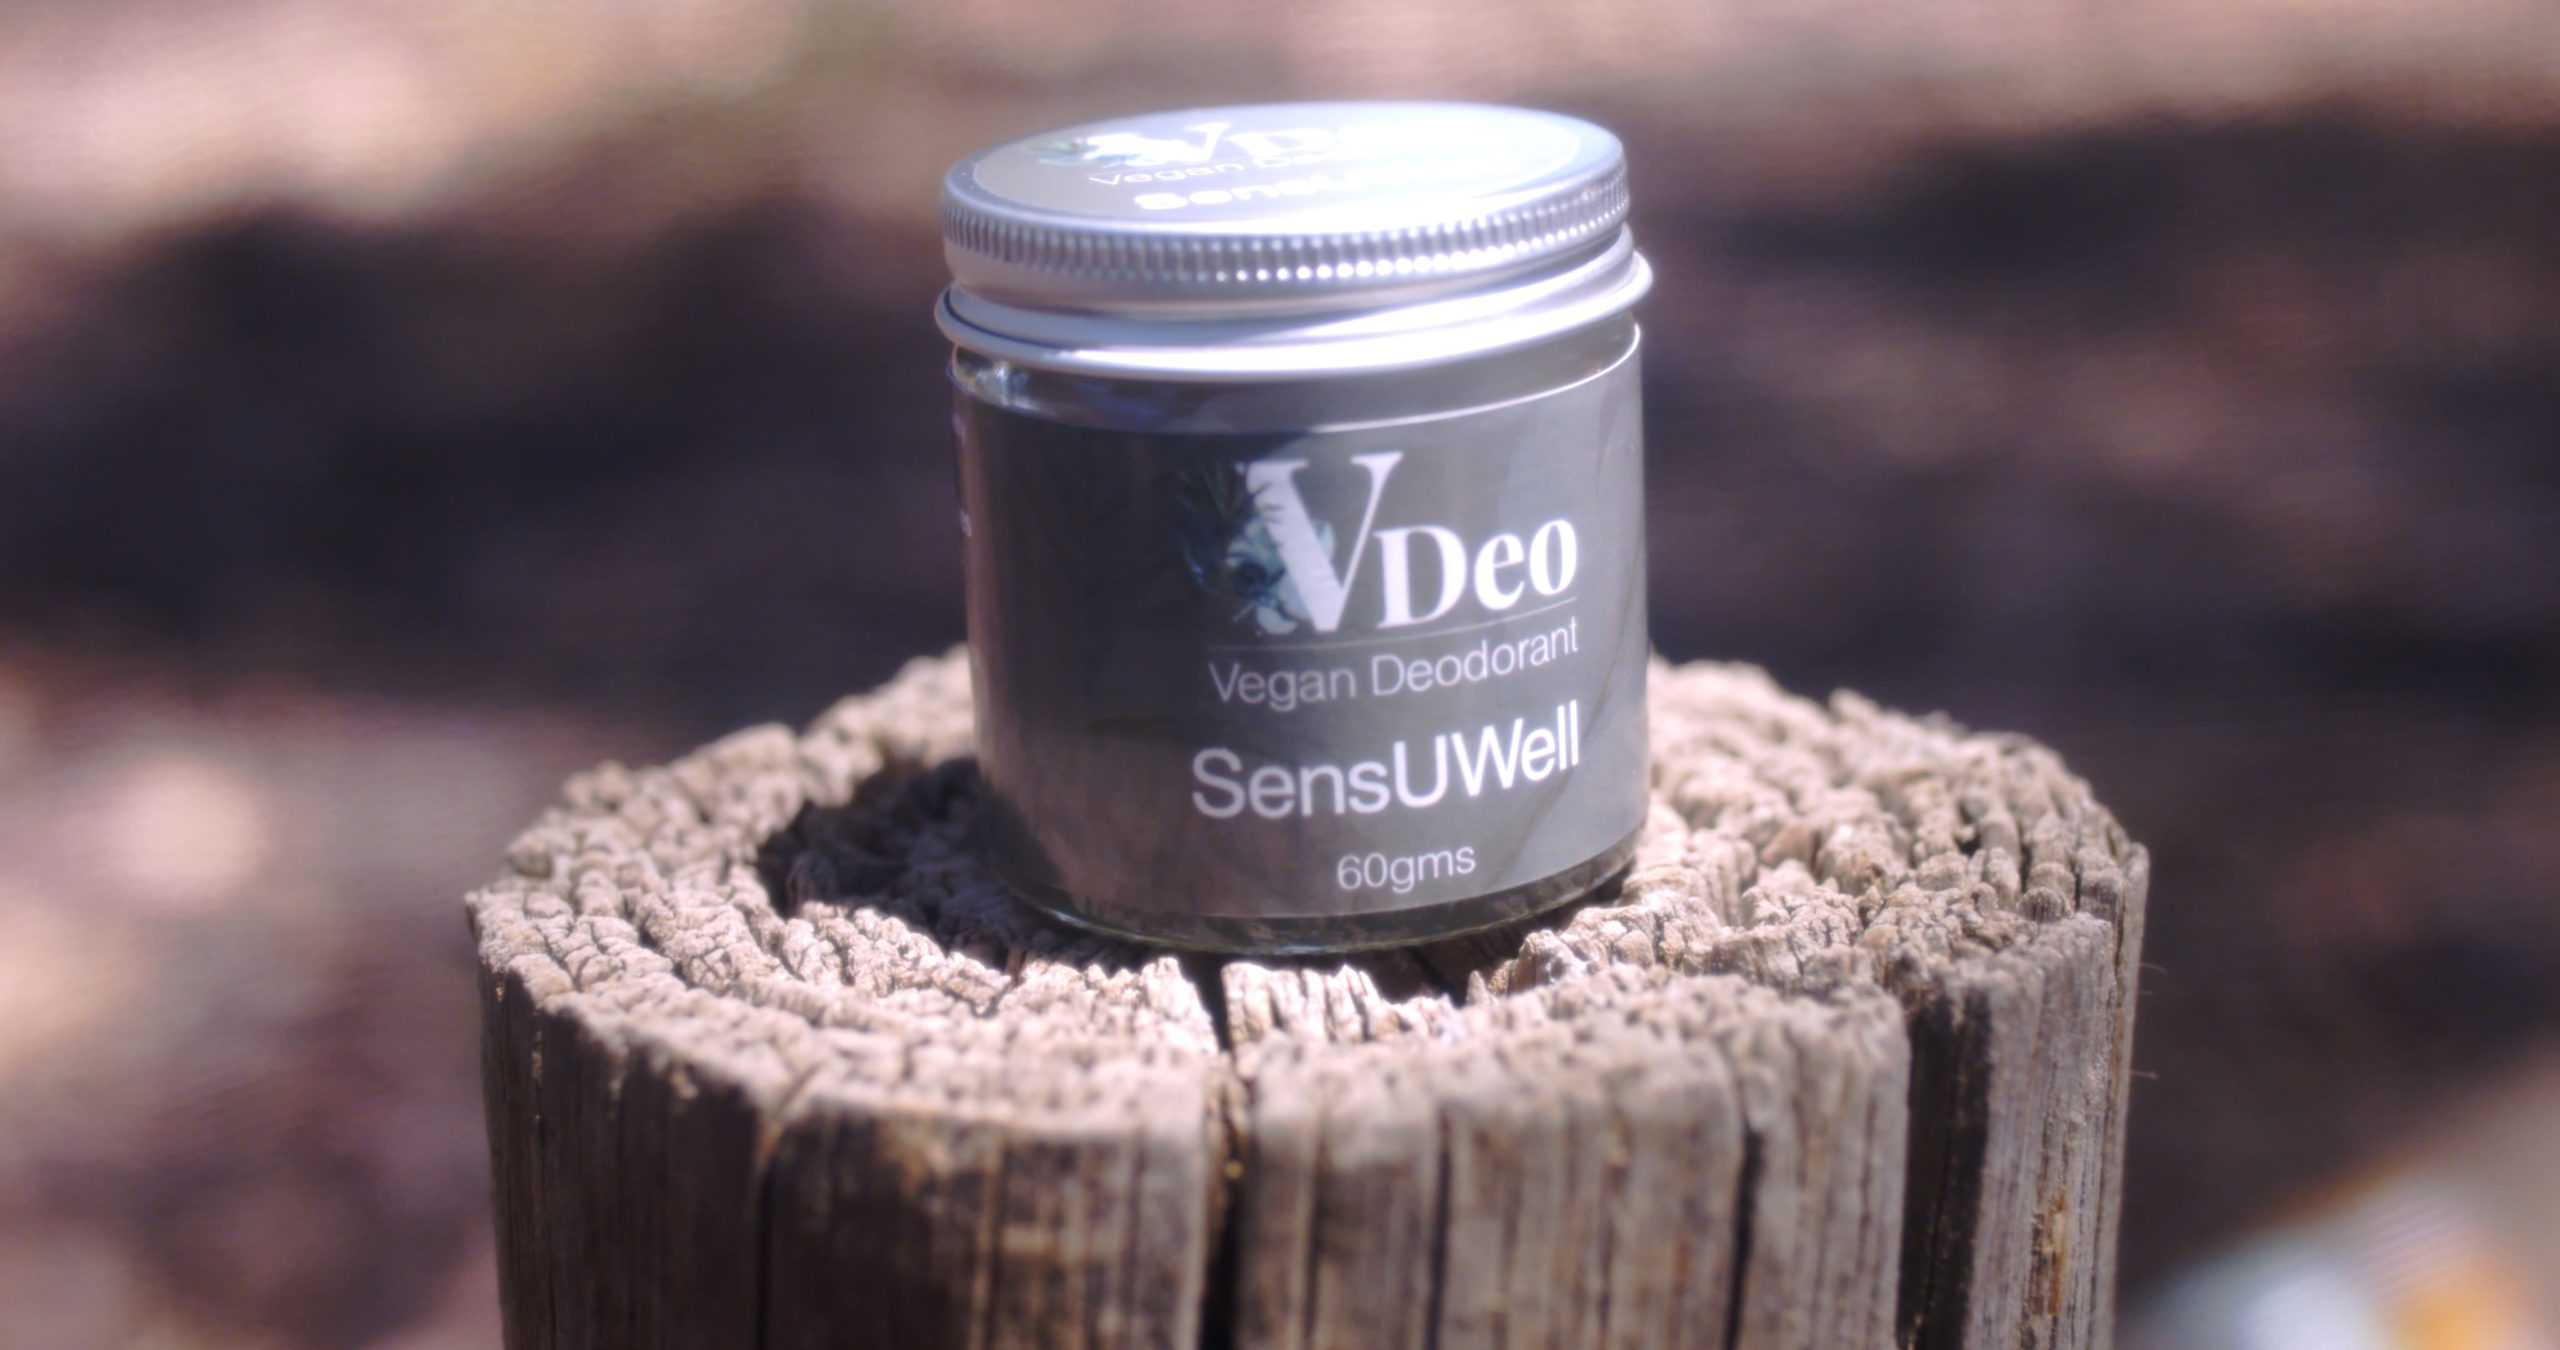 VDeo Vegan Deodorant SensUWell 60g